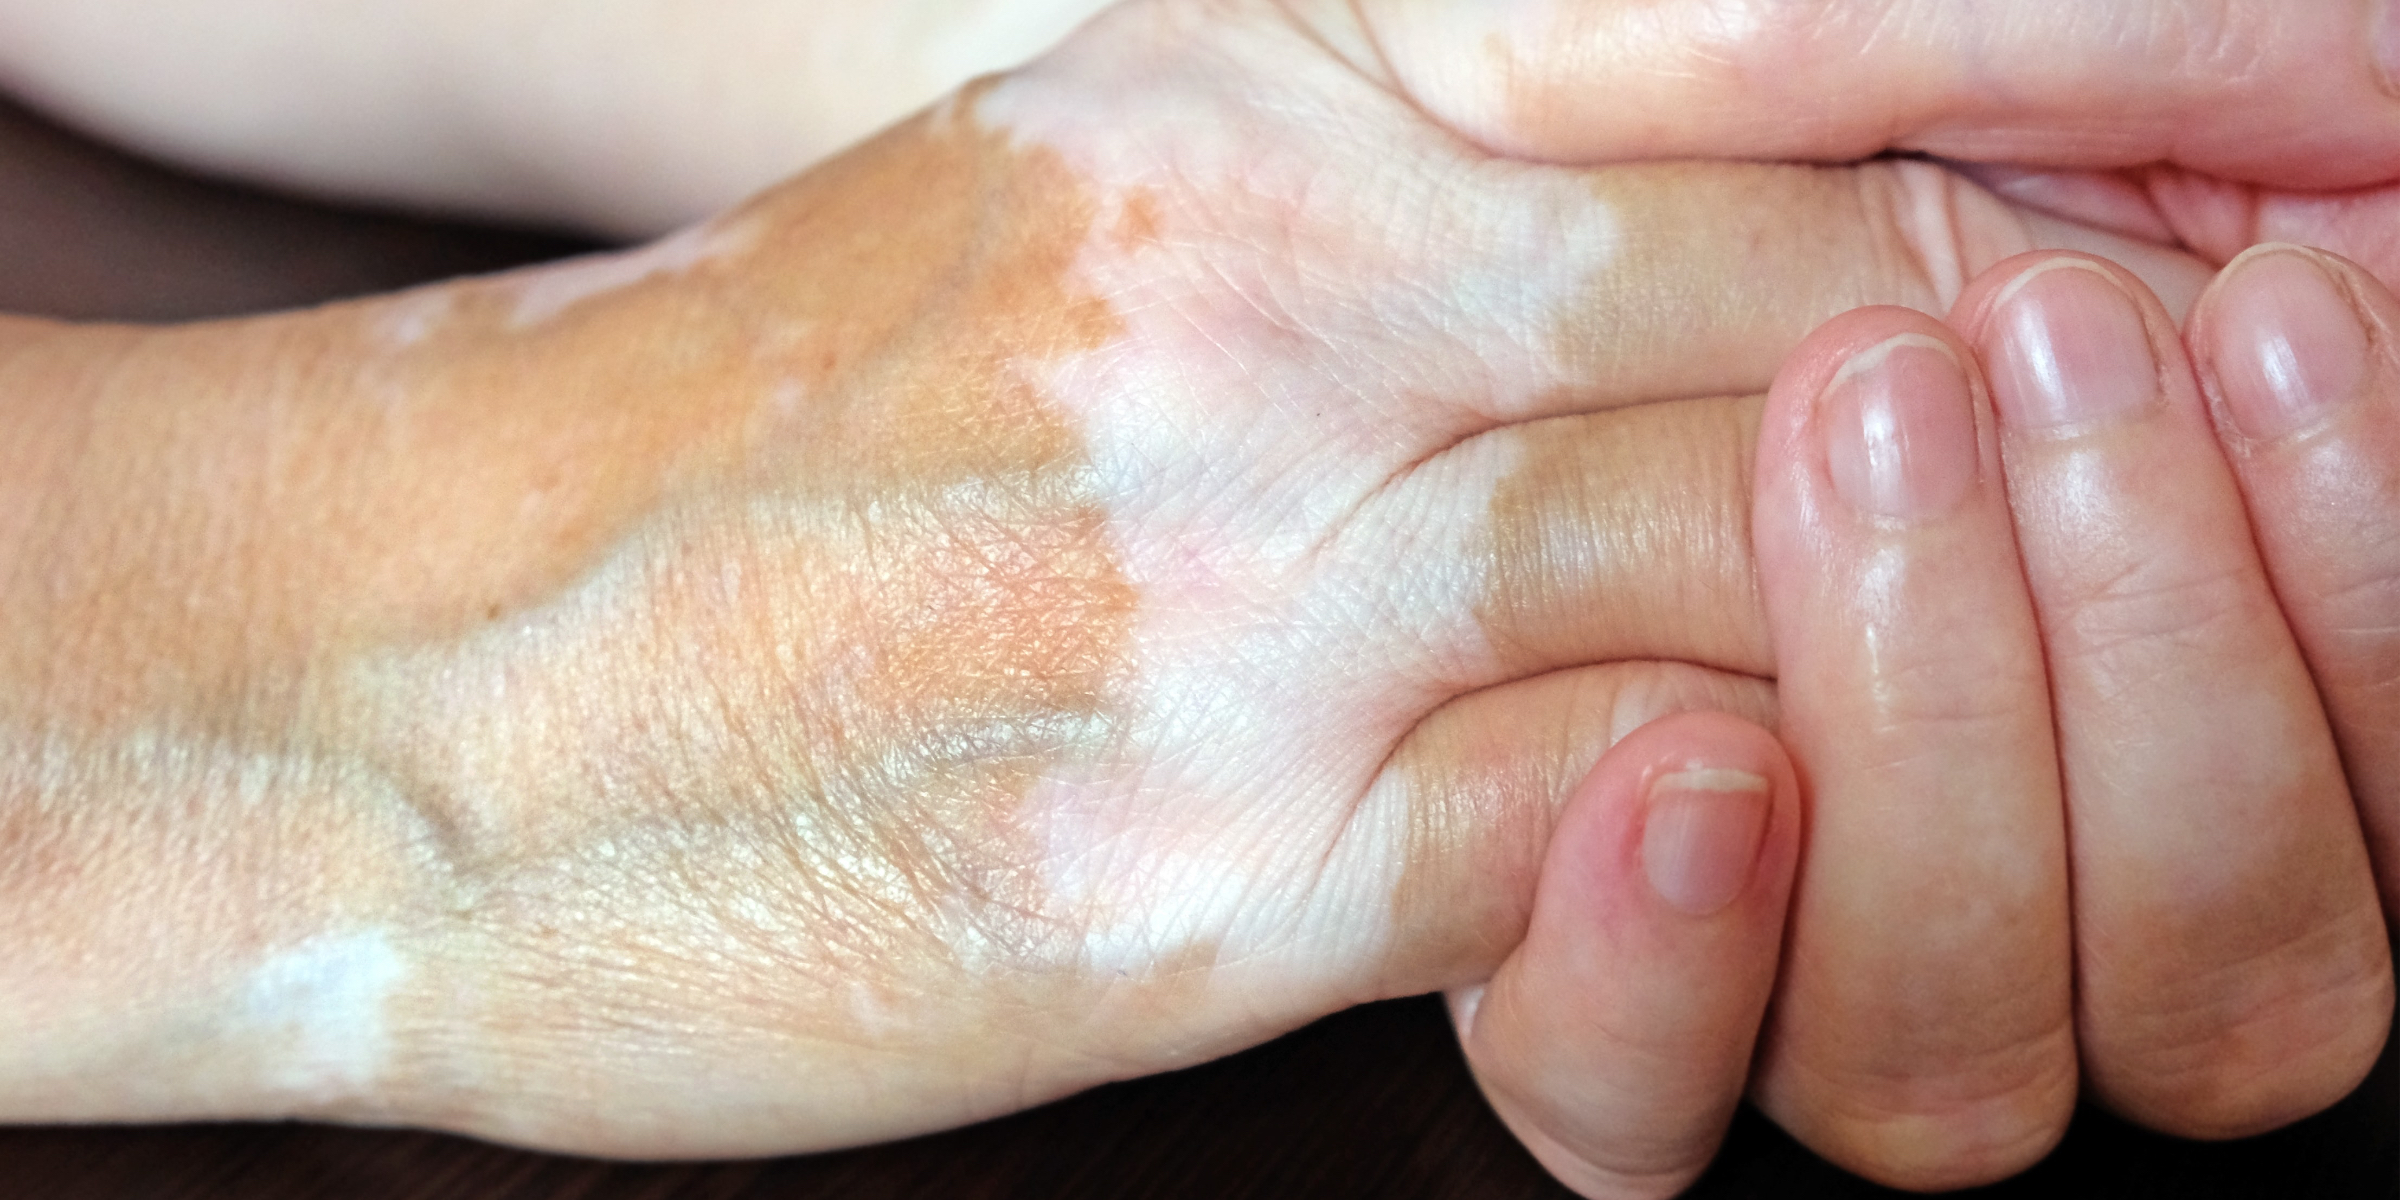 vitiligo on hands